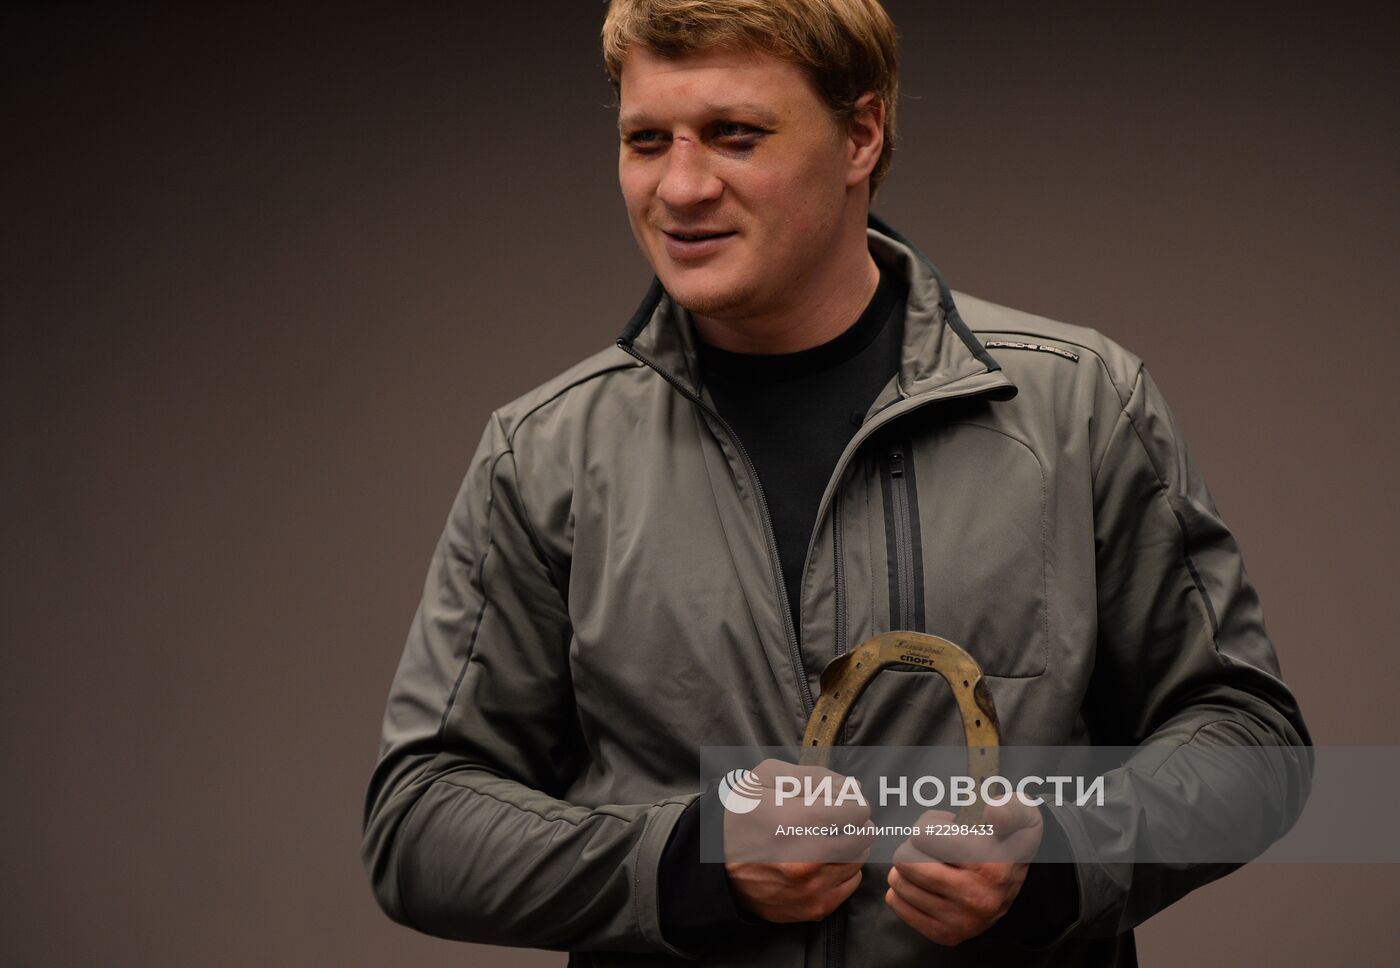 Пресс-конференция боксера Александра Поветкина